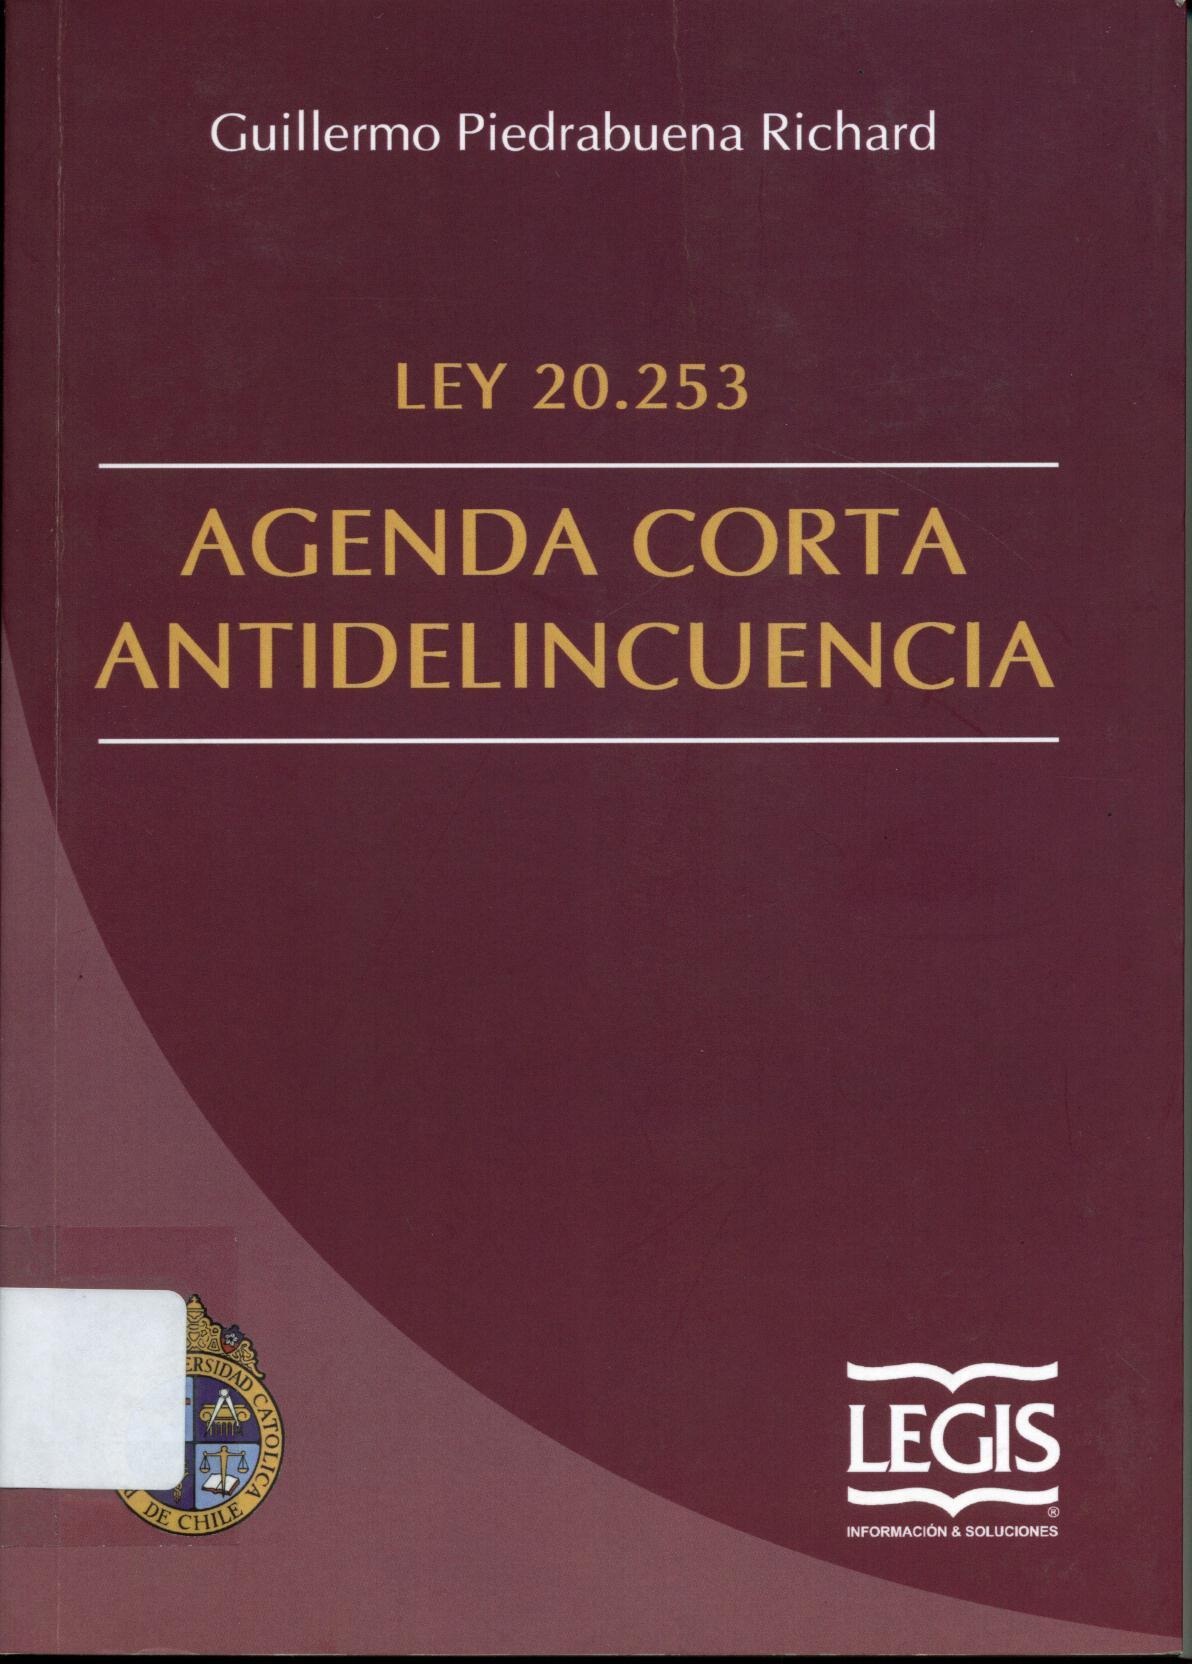 Ley 20.253 Agenda corta antidelincuencia